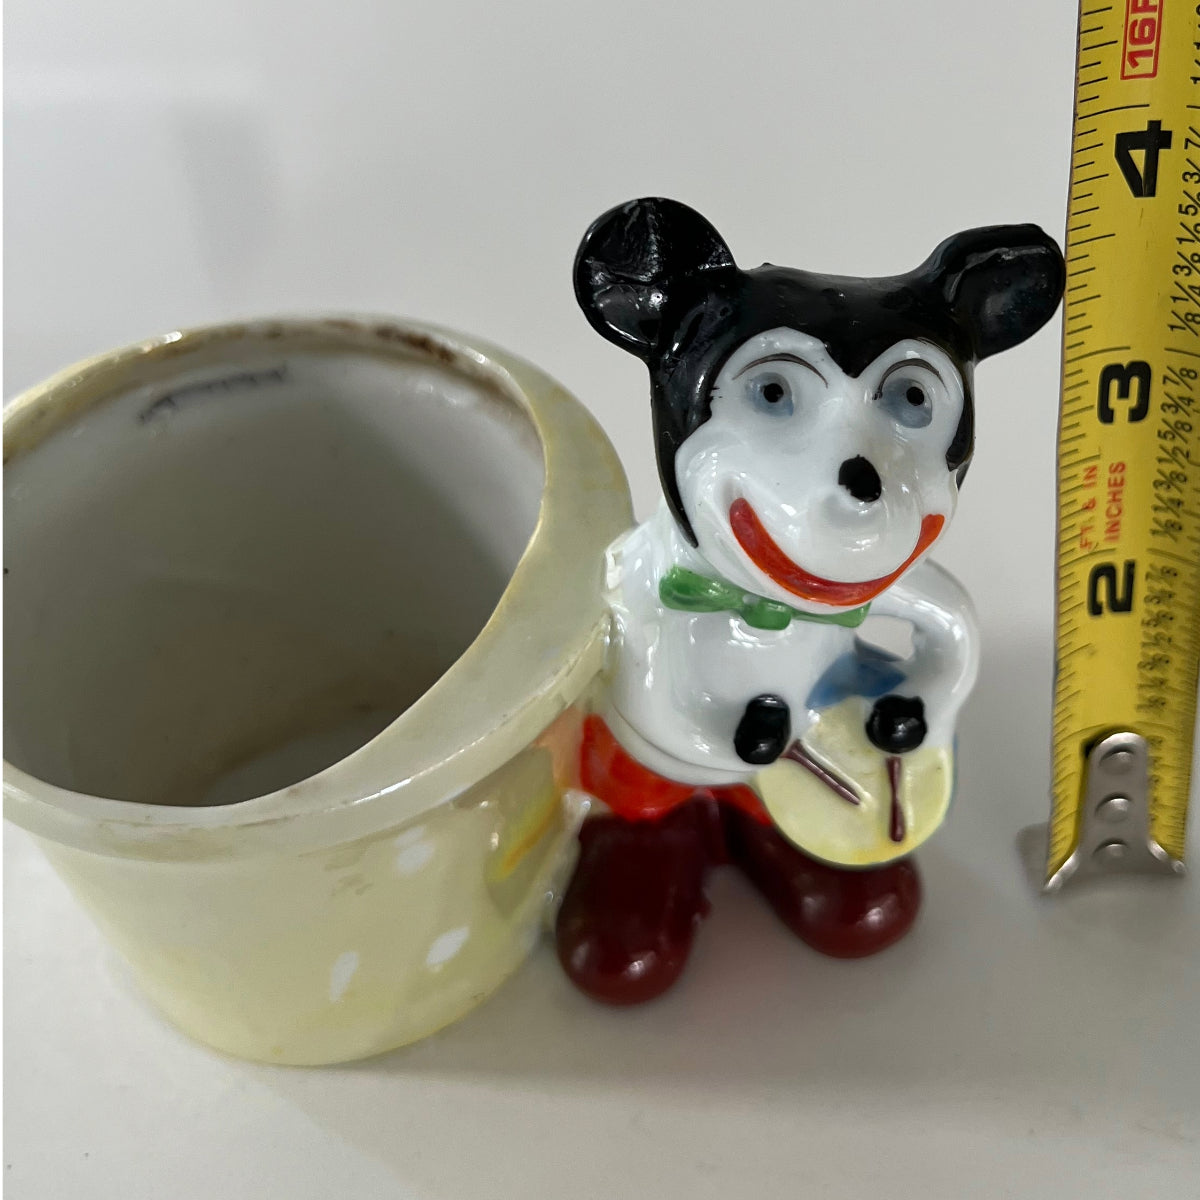 Rare VTG 1930-1950s Mickey Planter Ceramic Figurine